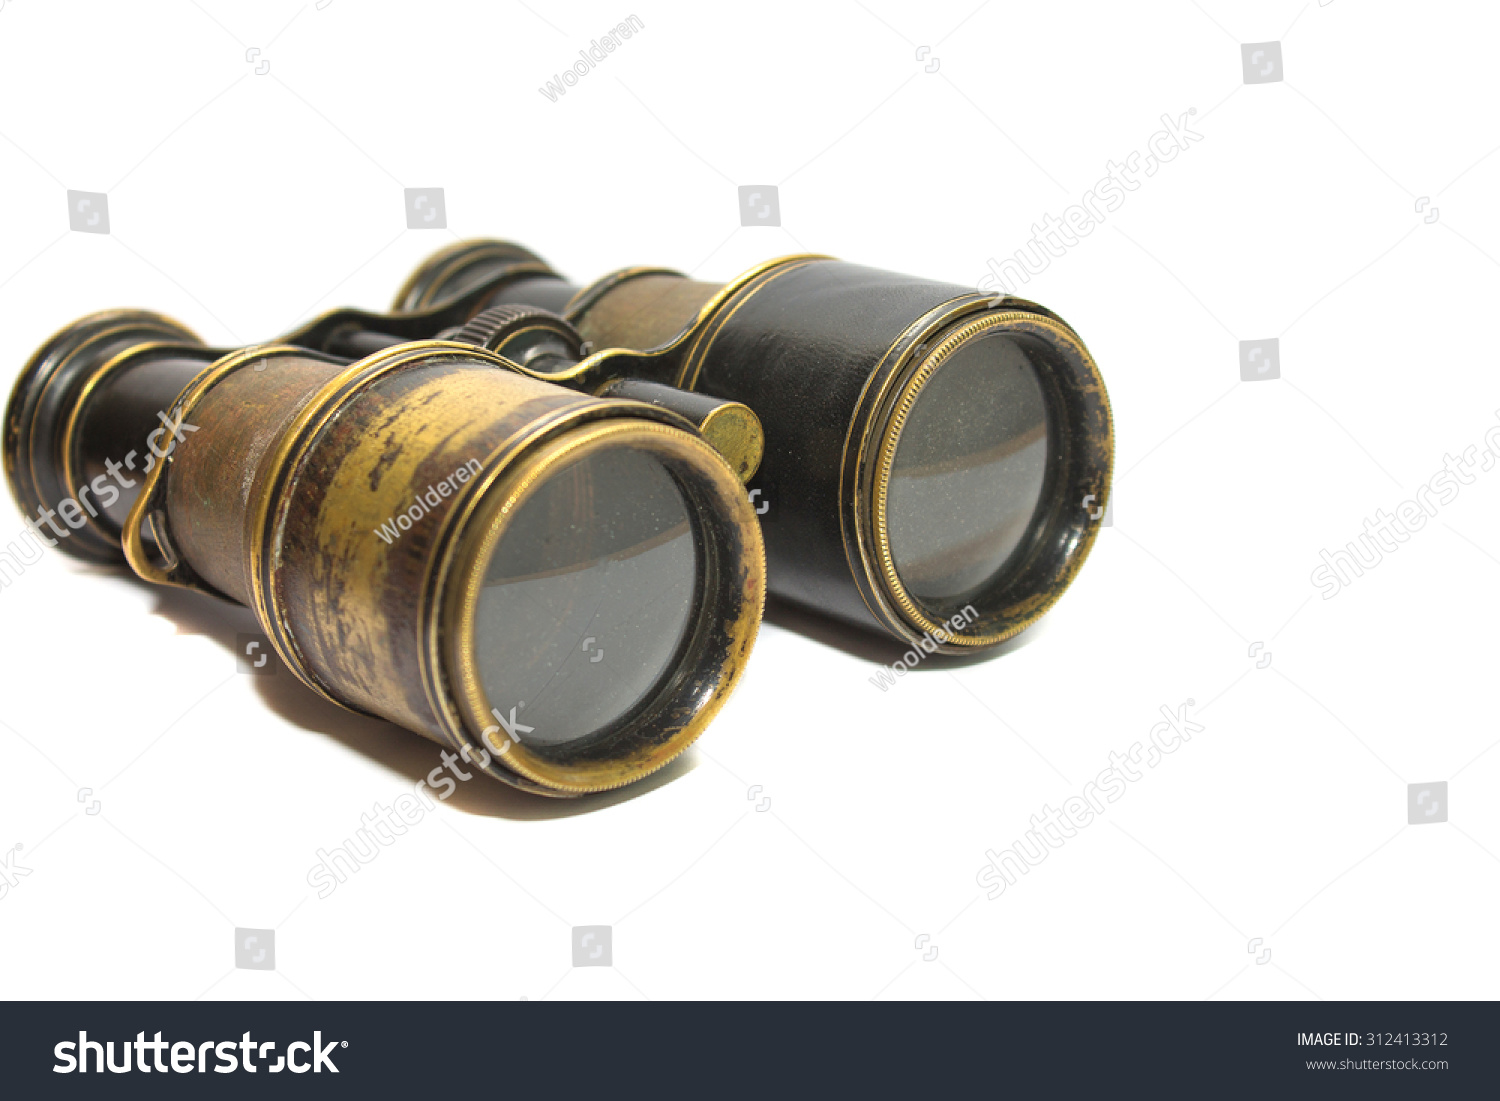 Old binoculars on white background #312413312